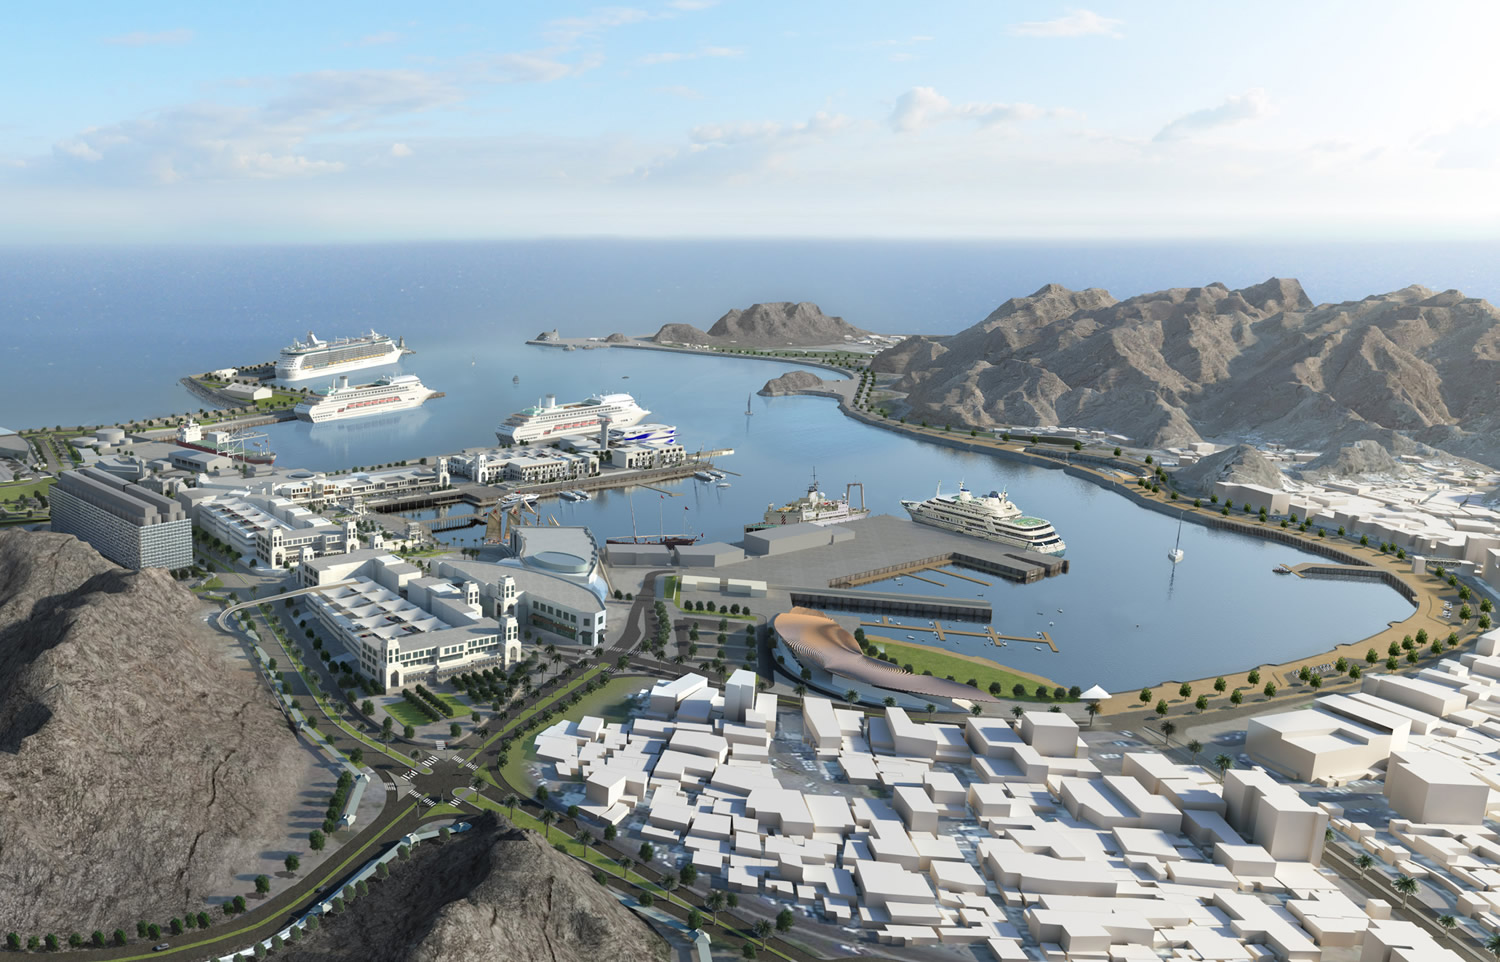 Mina Al Sultan Qaboos Waterfront Project -